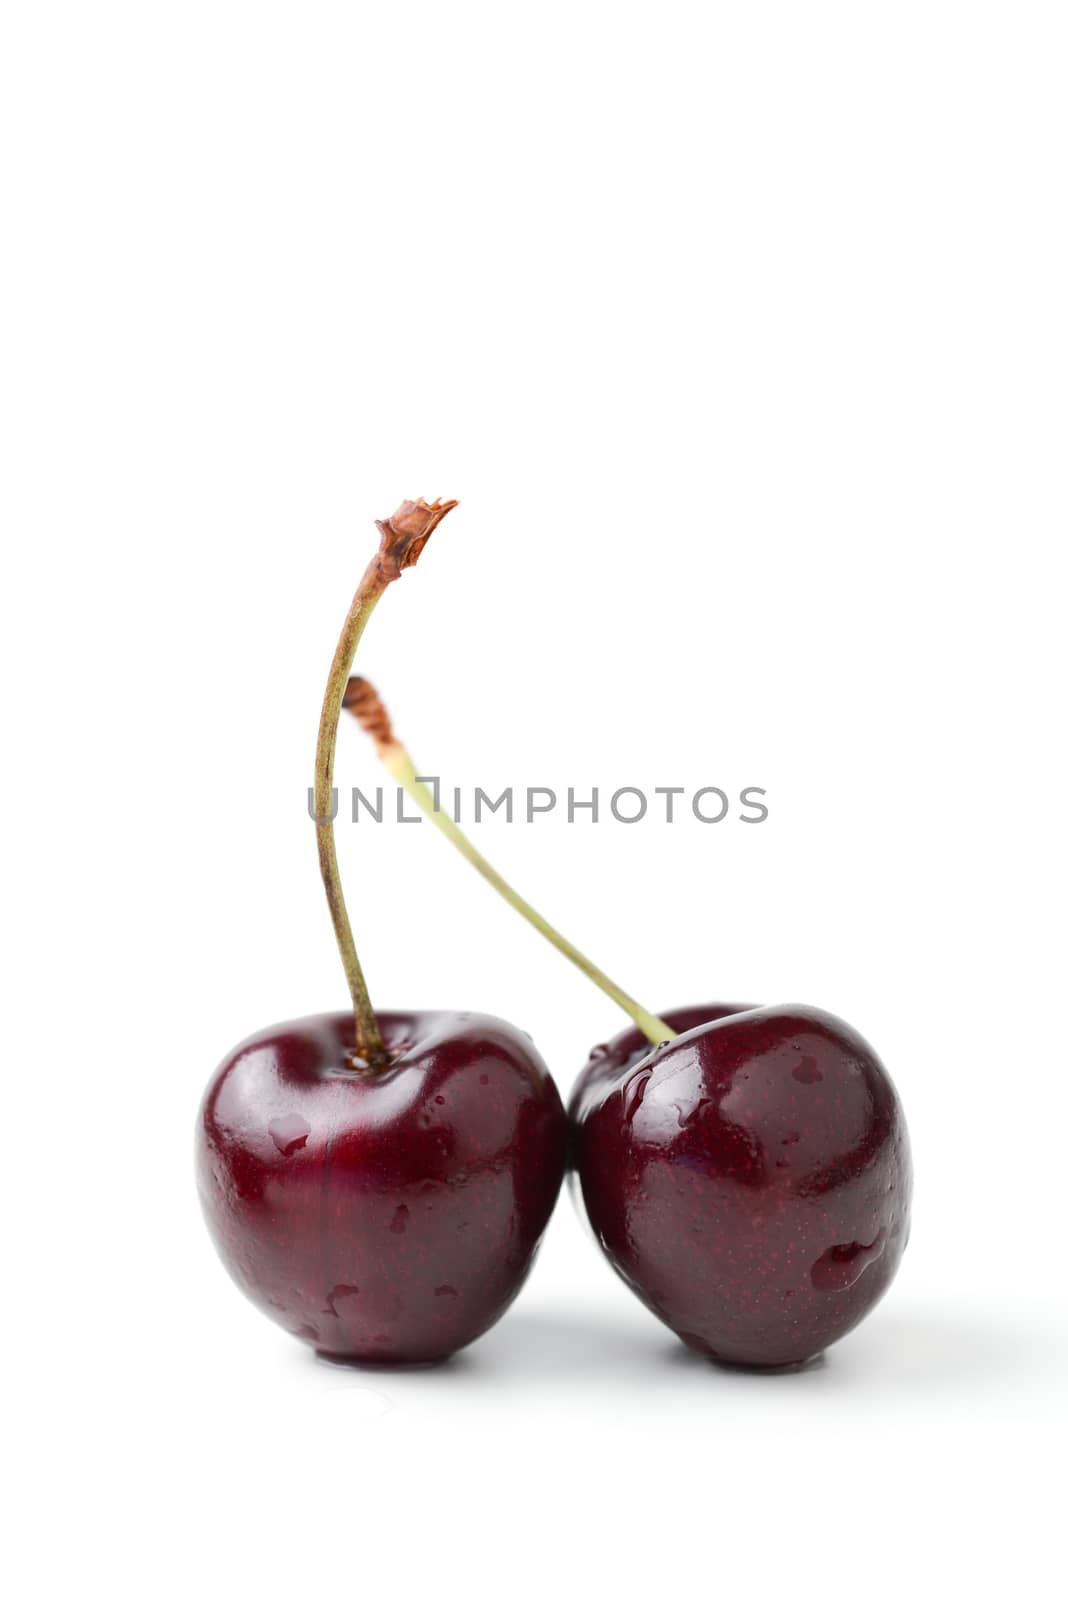 cherries by antpkr